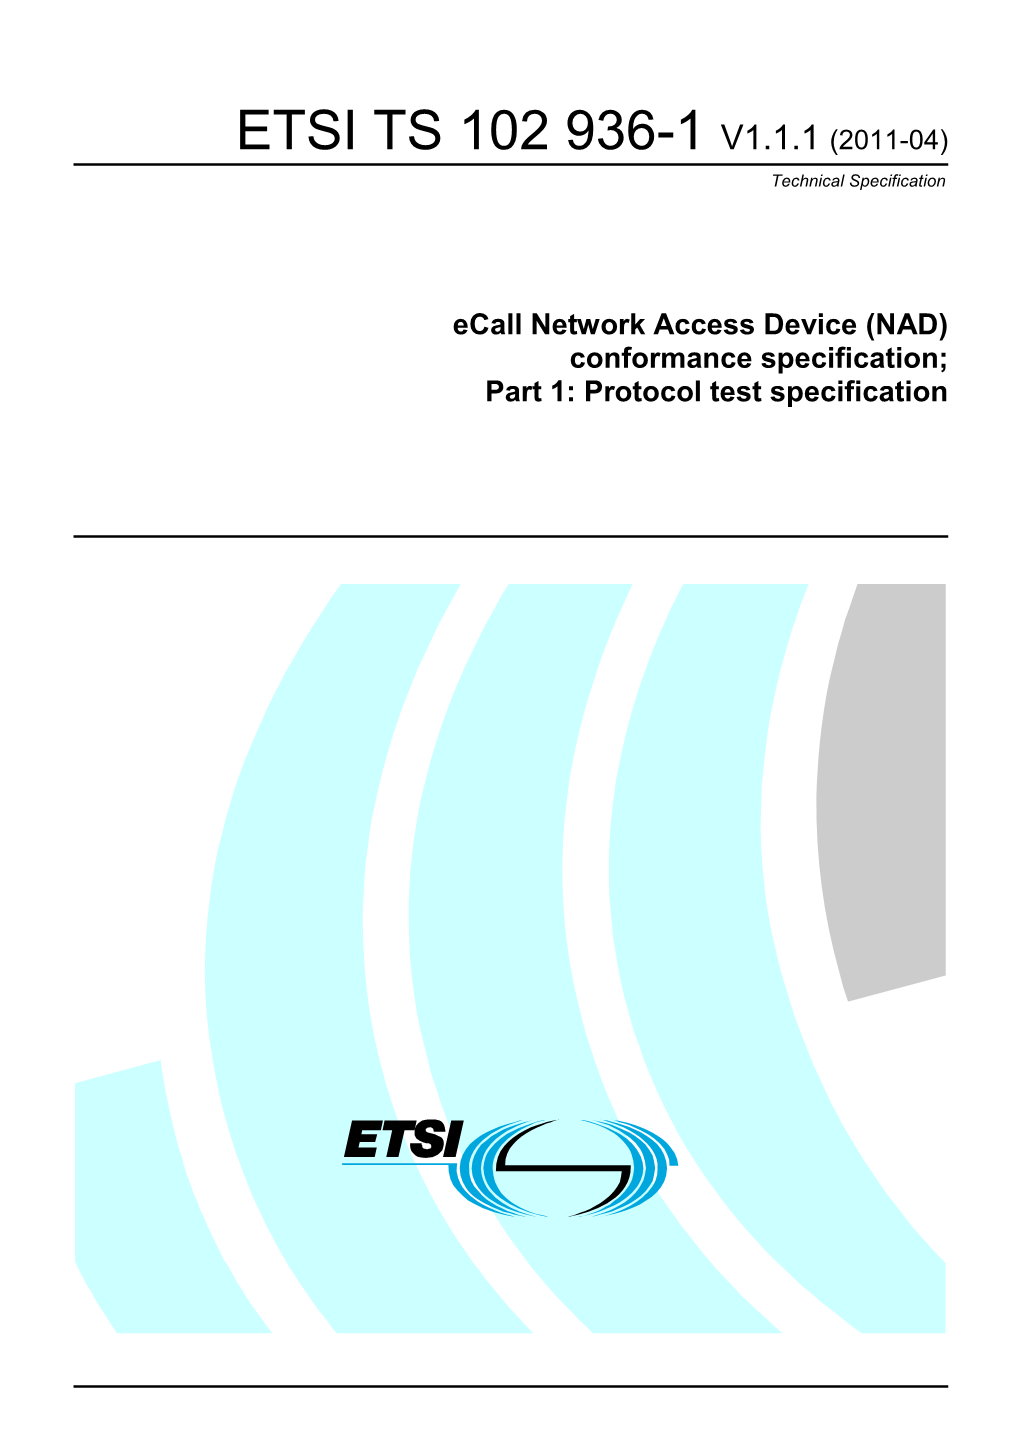 ETSI TS 102 936-1 V1.1.1 (2011-04) Technical Specification